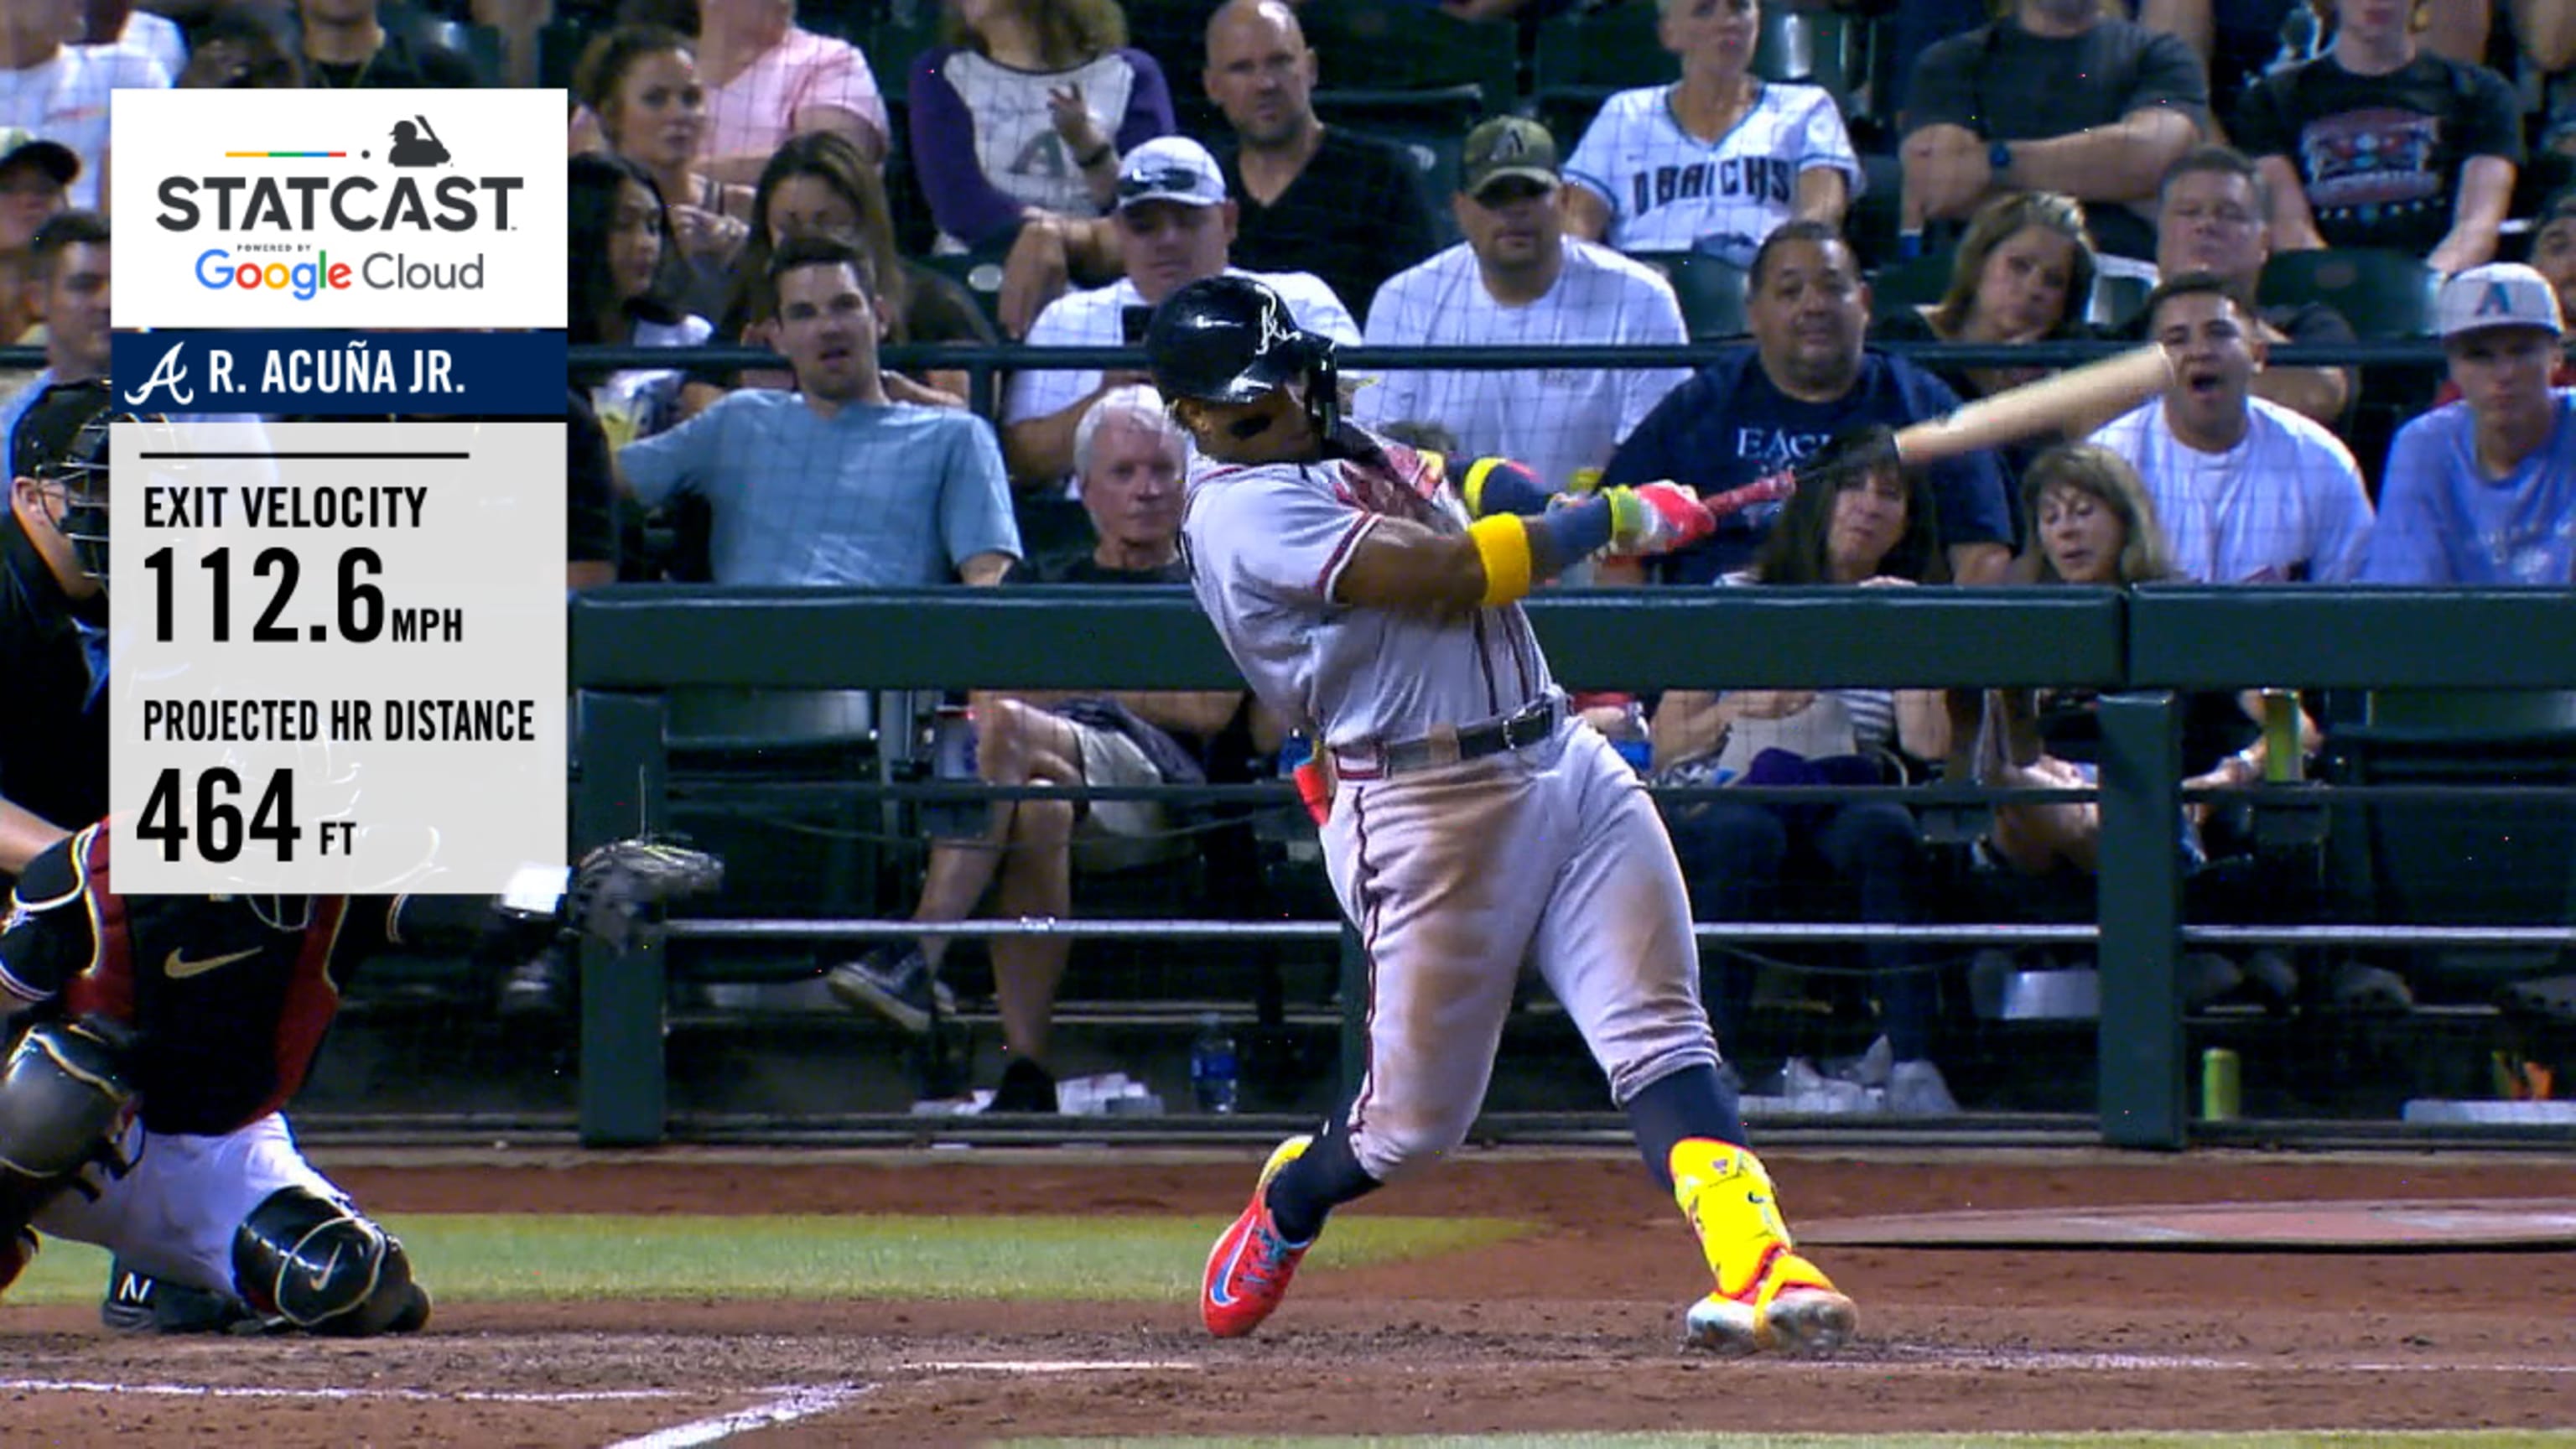 Top prospect De La Cruz hits mammoth home run in second MLB game